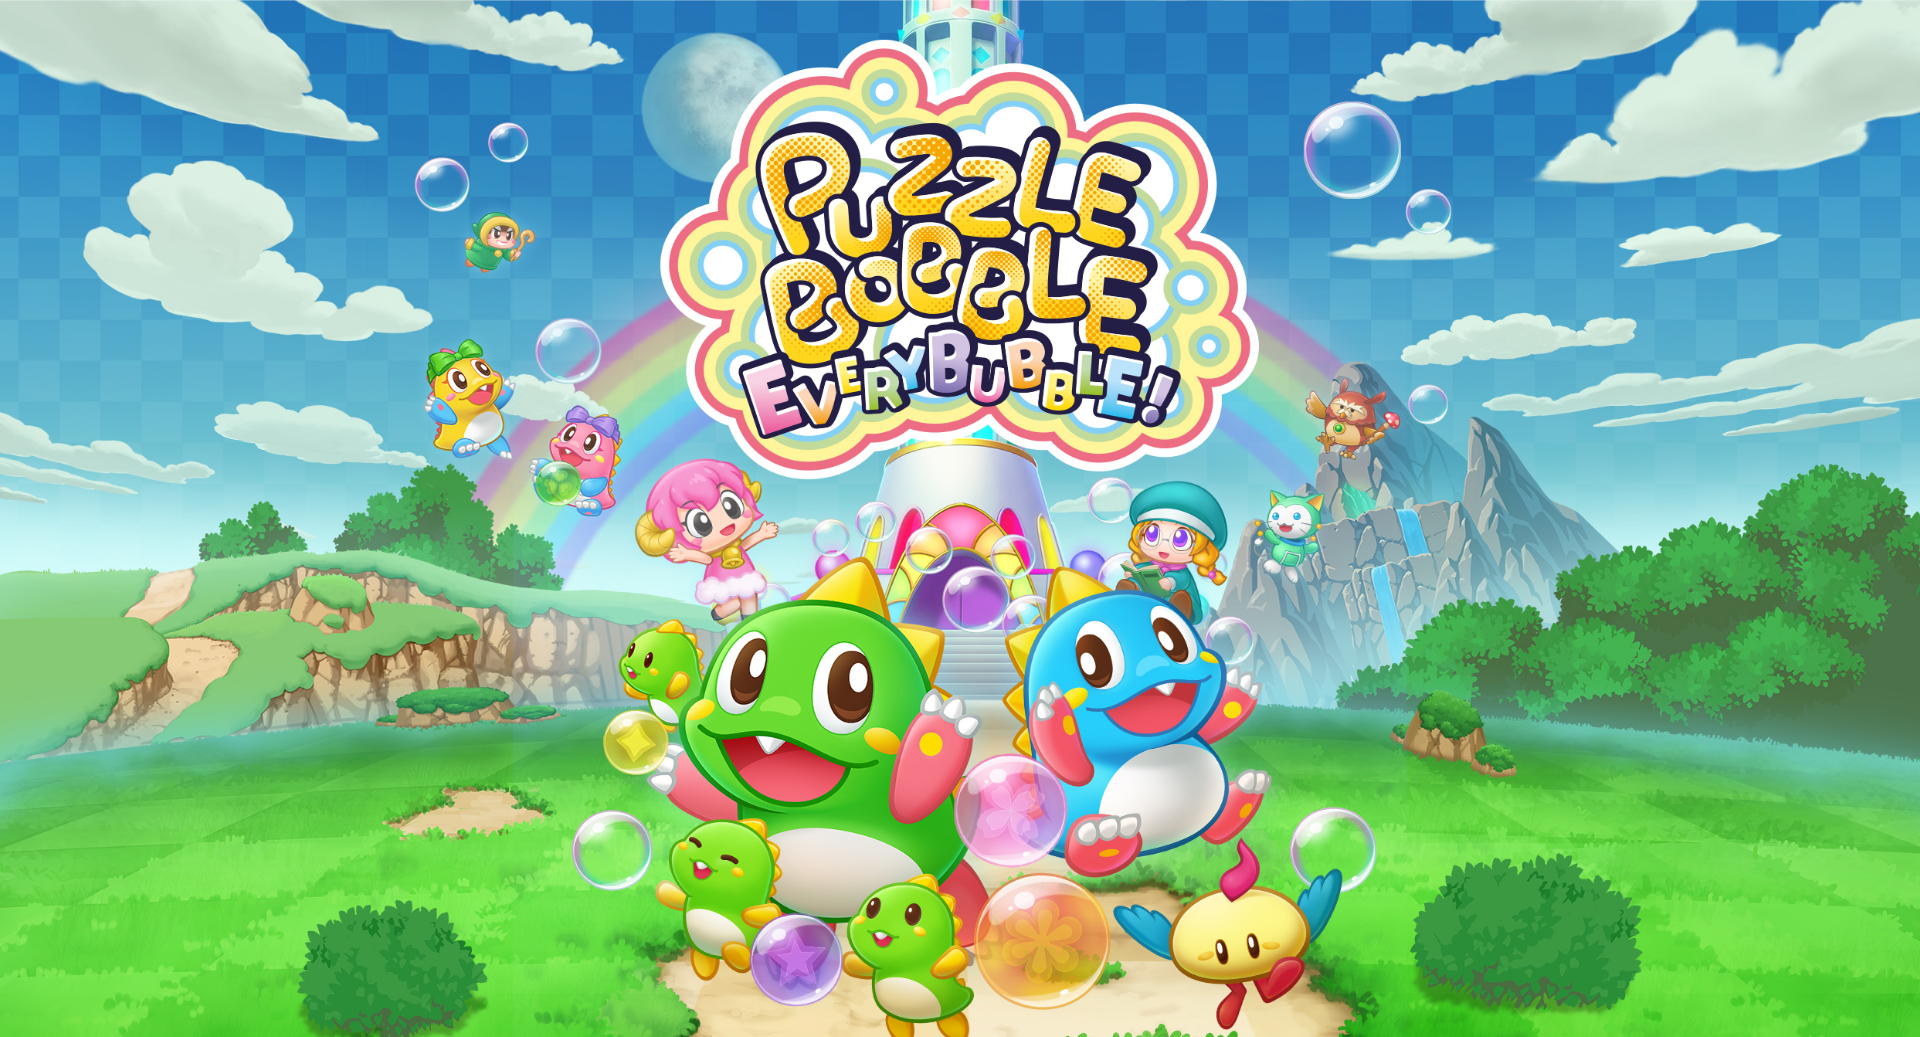 Puzzle Bobble Everybubble! incluirá o modo Puzzle Bobble vs. Space Invaders